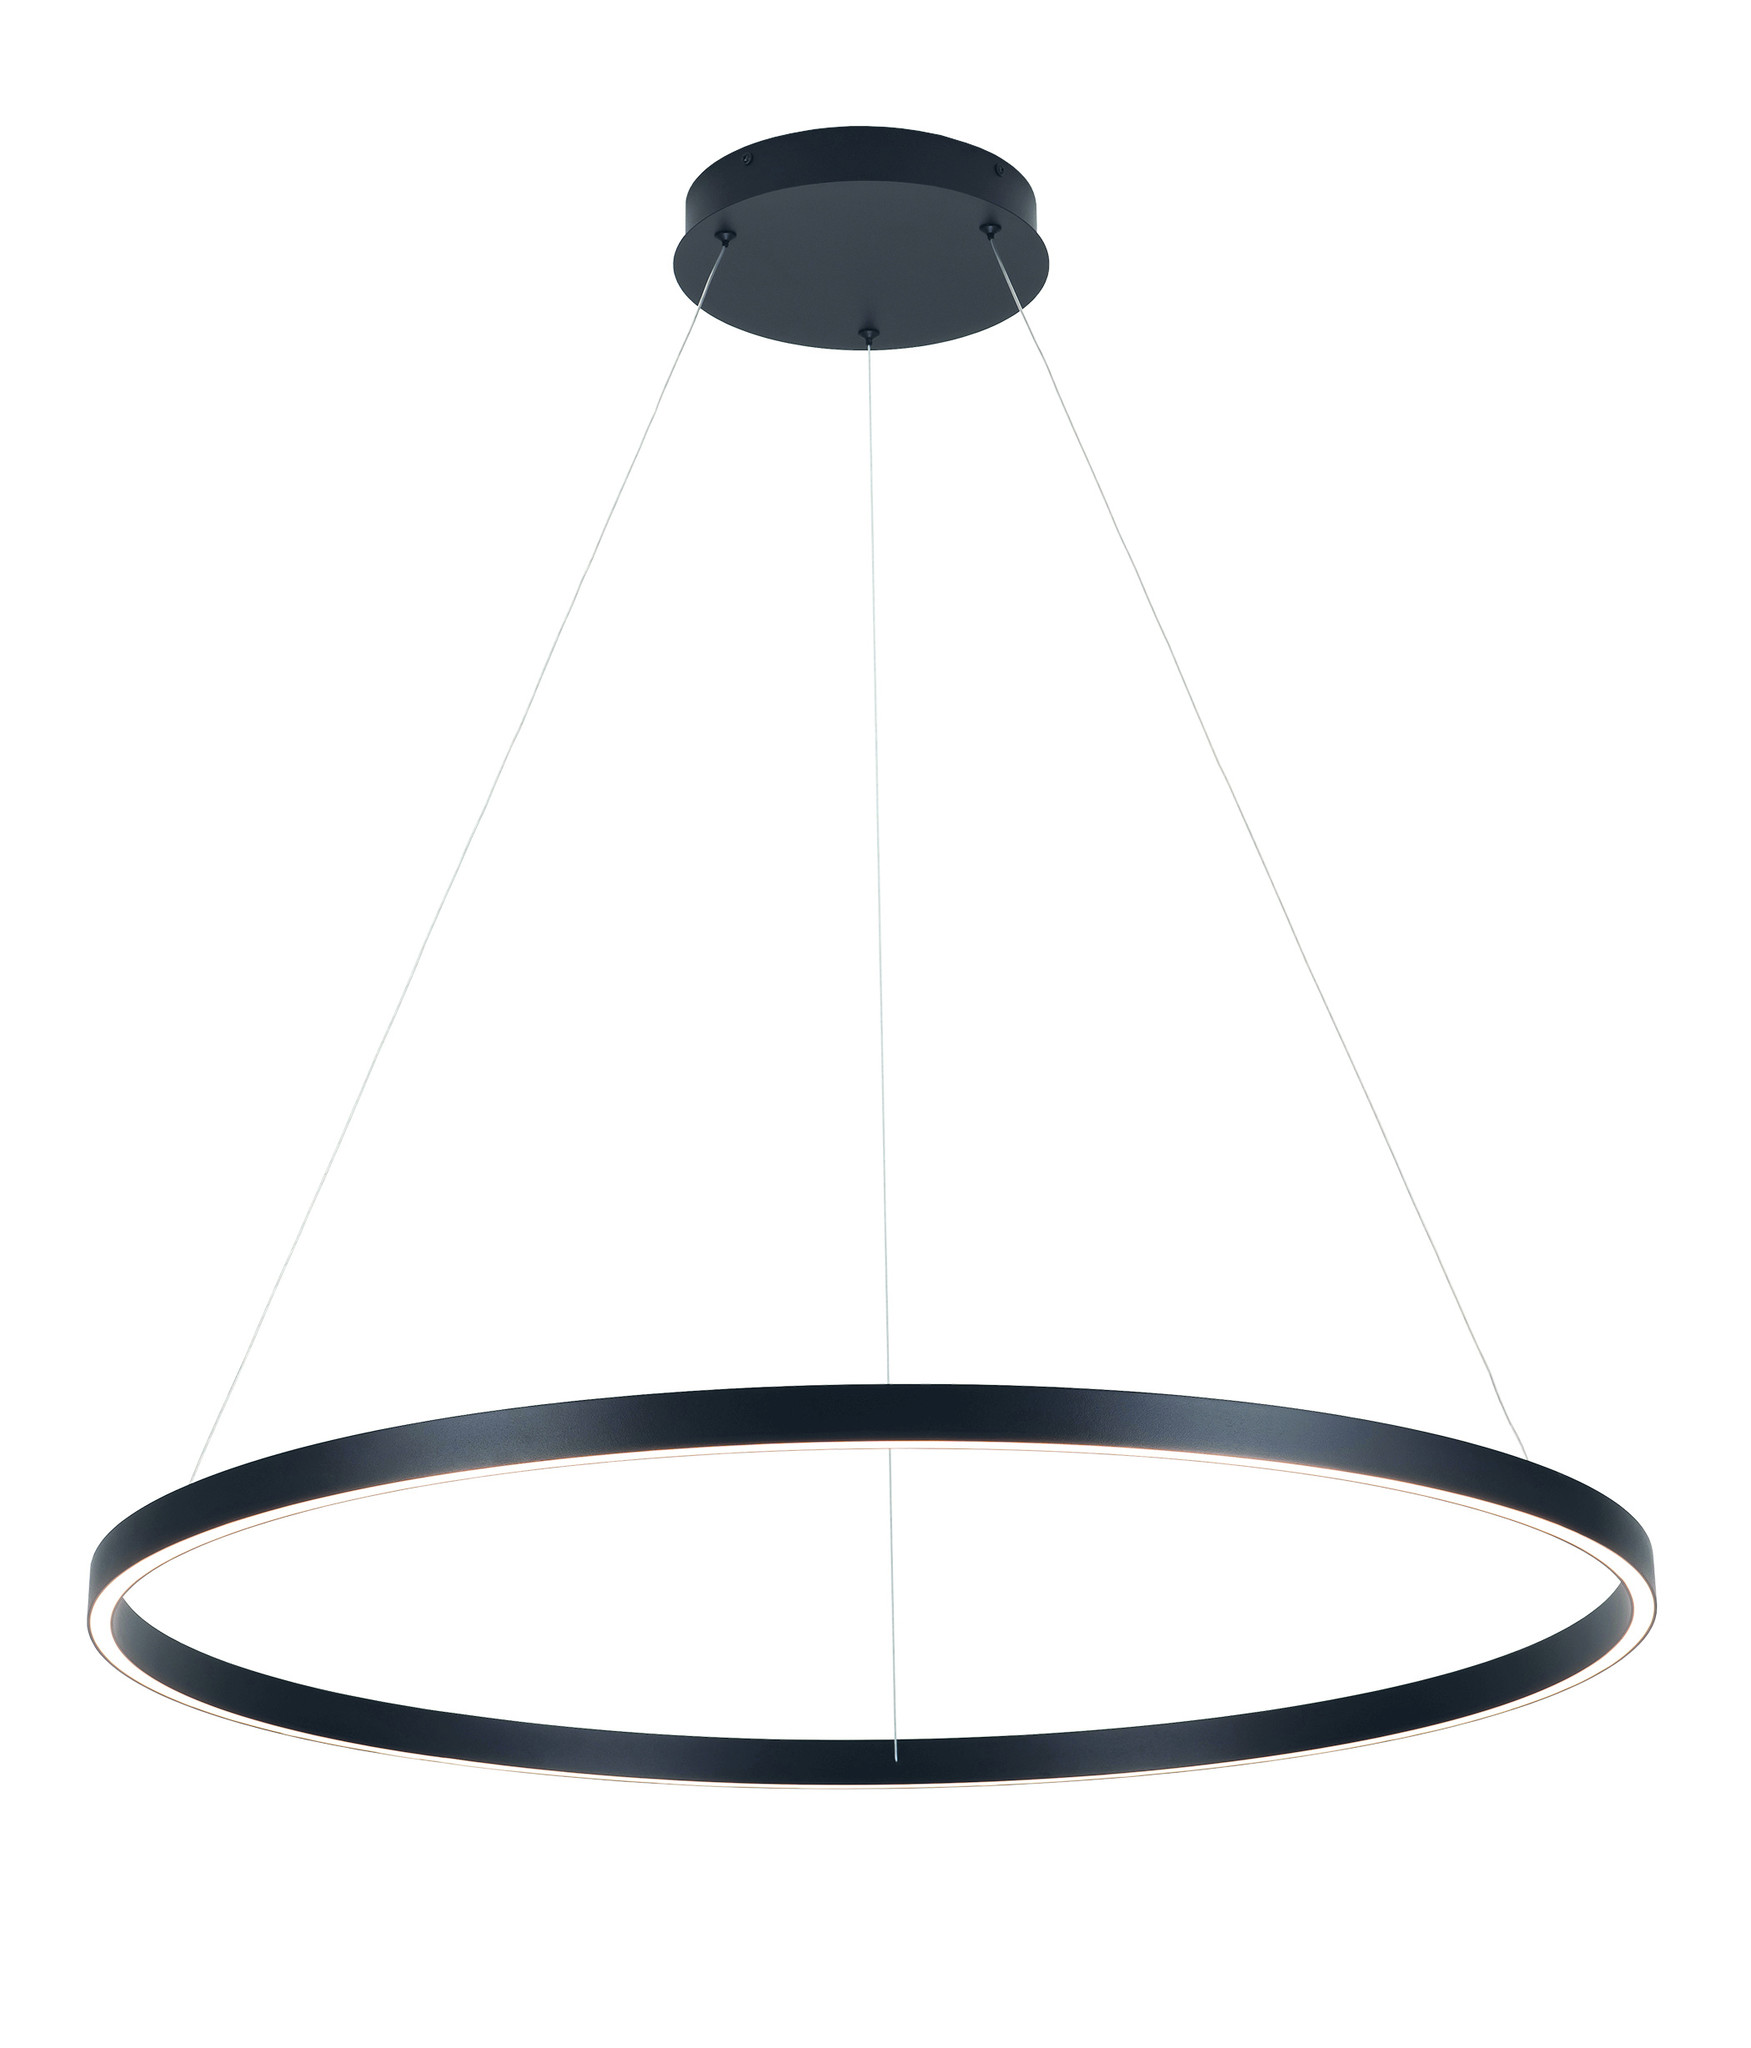 verlamming Catastrofaal Dusver Hanglamp design rond LED zwart of wit 76W 900mm Ø licht up en down | My  Planet LED